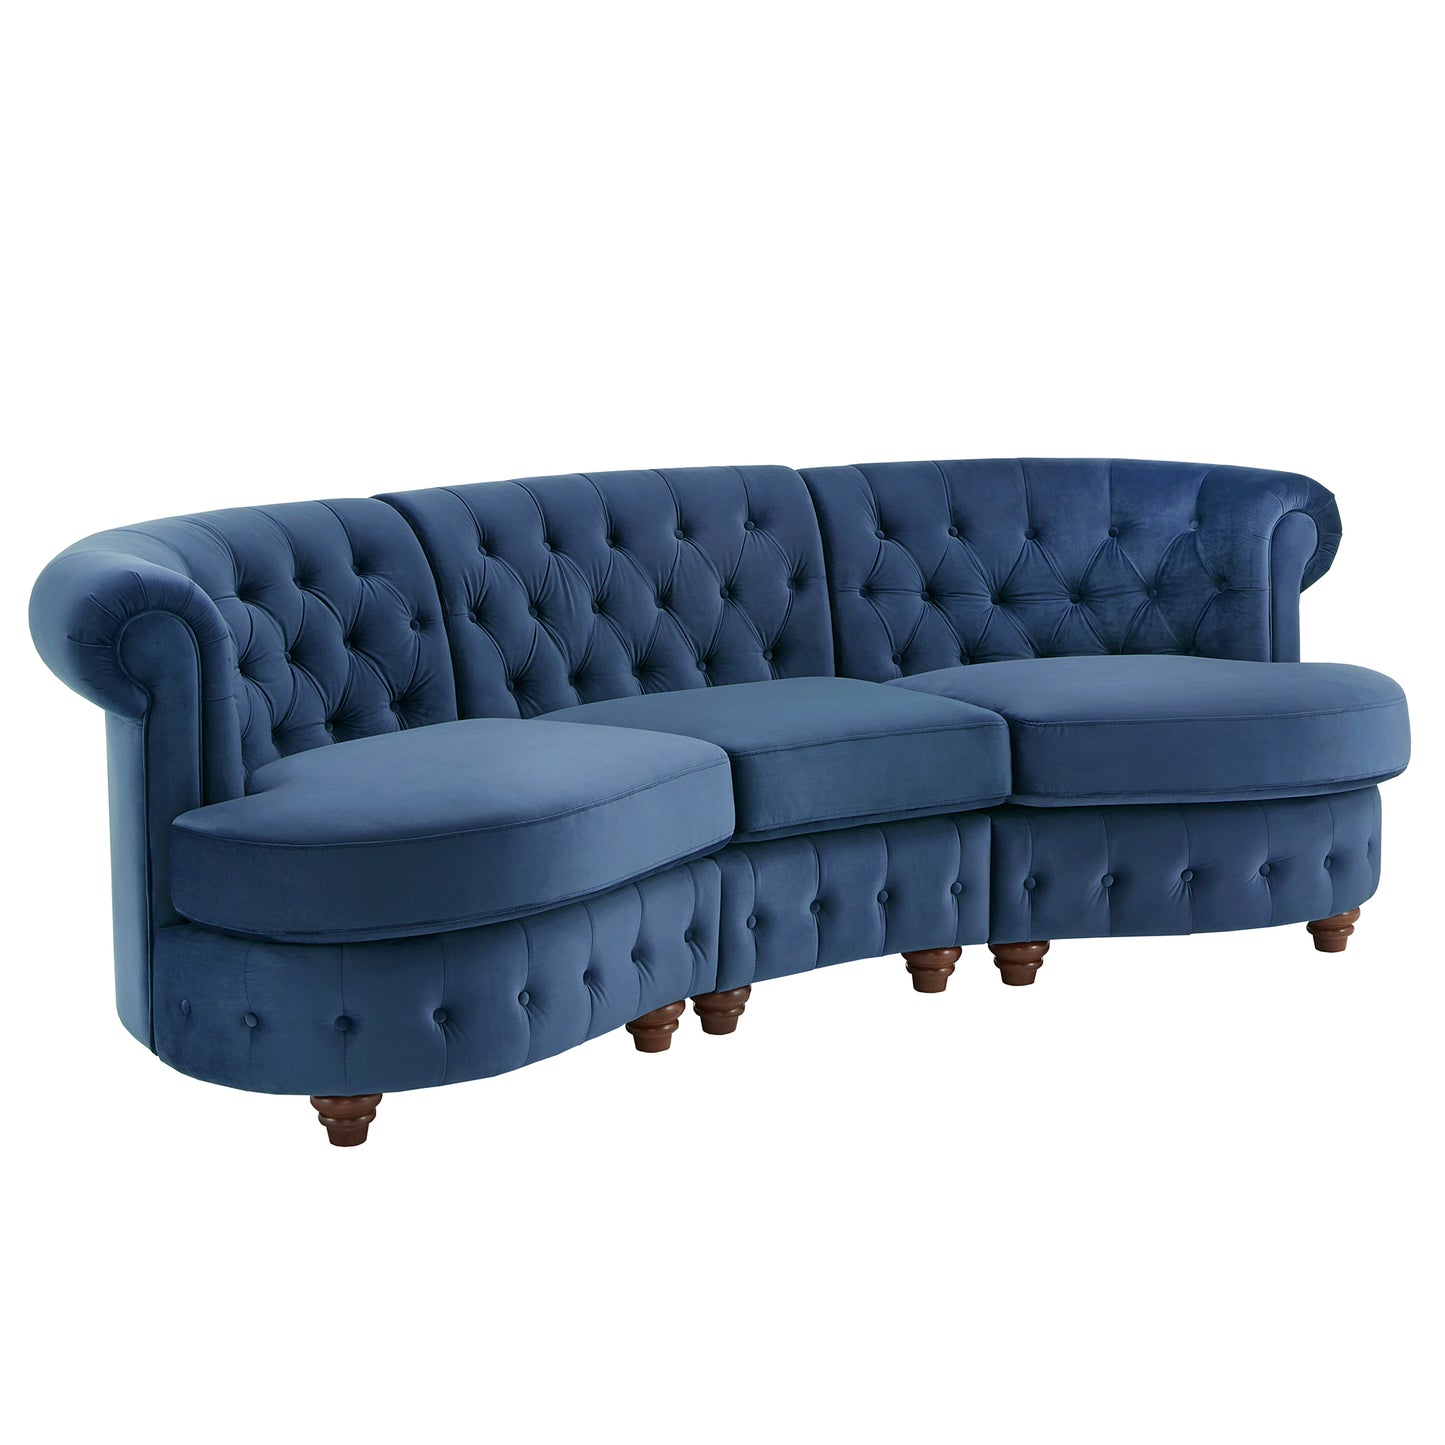 Tufted Scroll Arm Chesterfield Curved Sofa - Blue Velvet